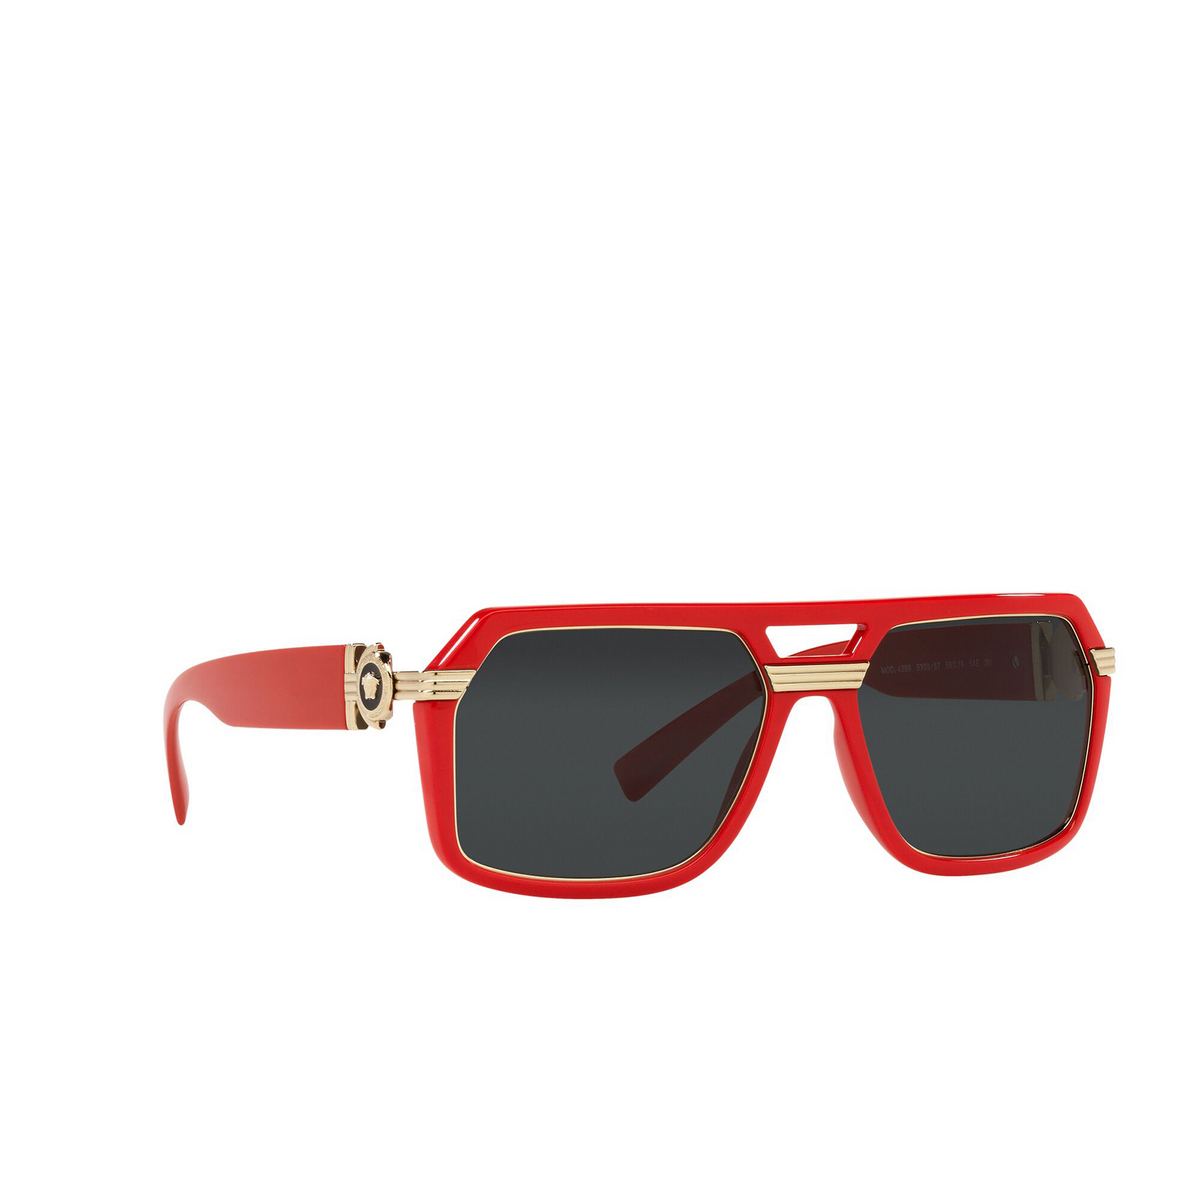 Versace® Aviator Sunglasses: VE4399 color Red 530987 - three-quarters view.